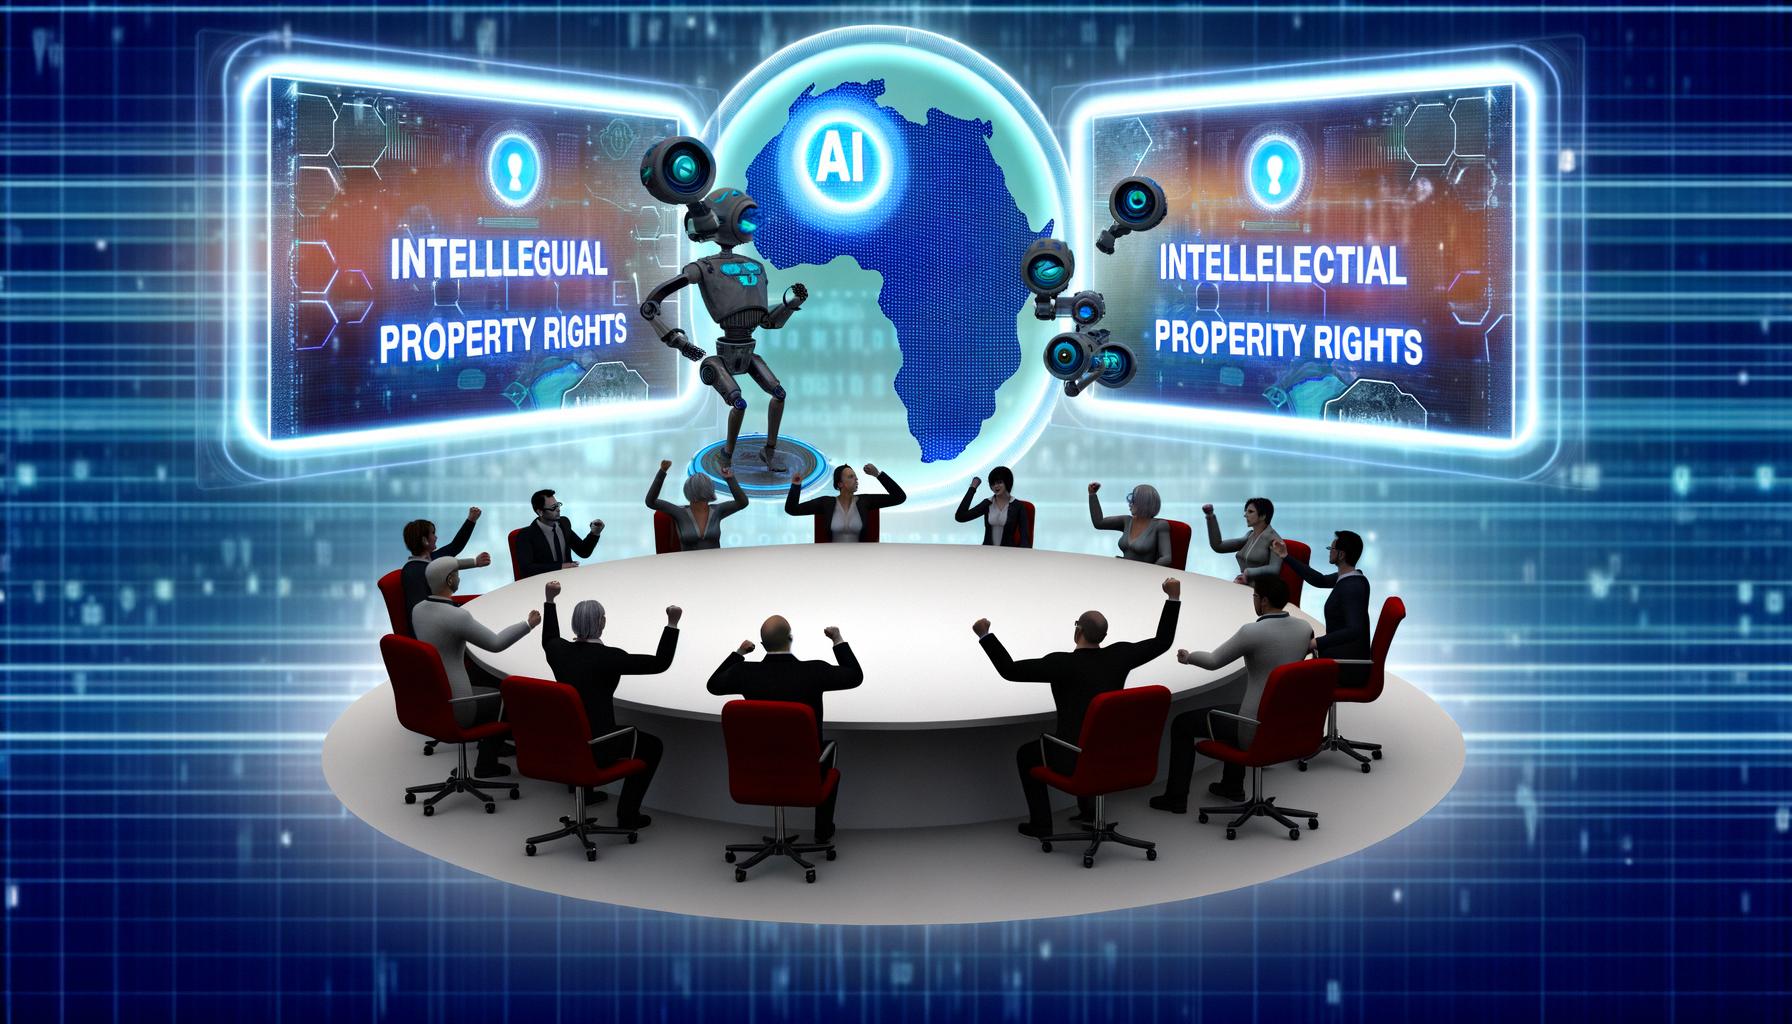 IP rights debates intensify amid AI and tech evolutions Balanced News